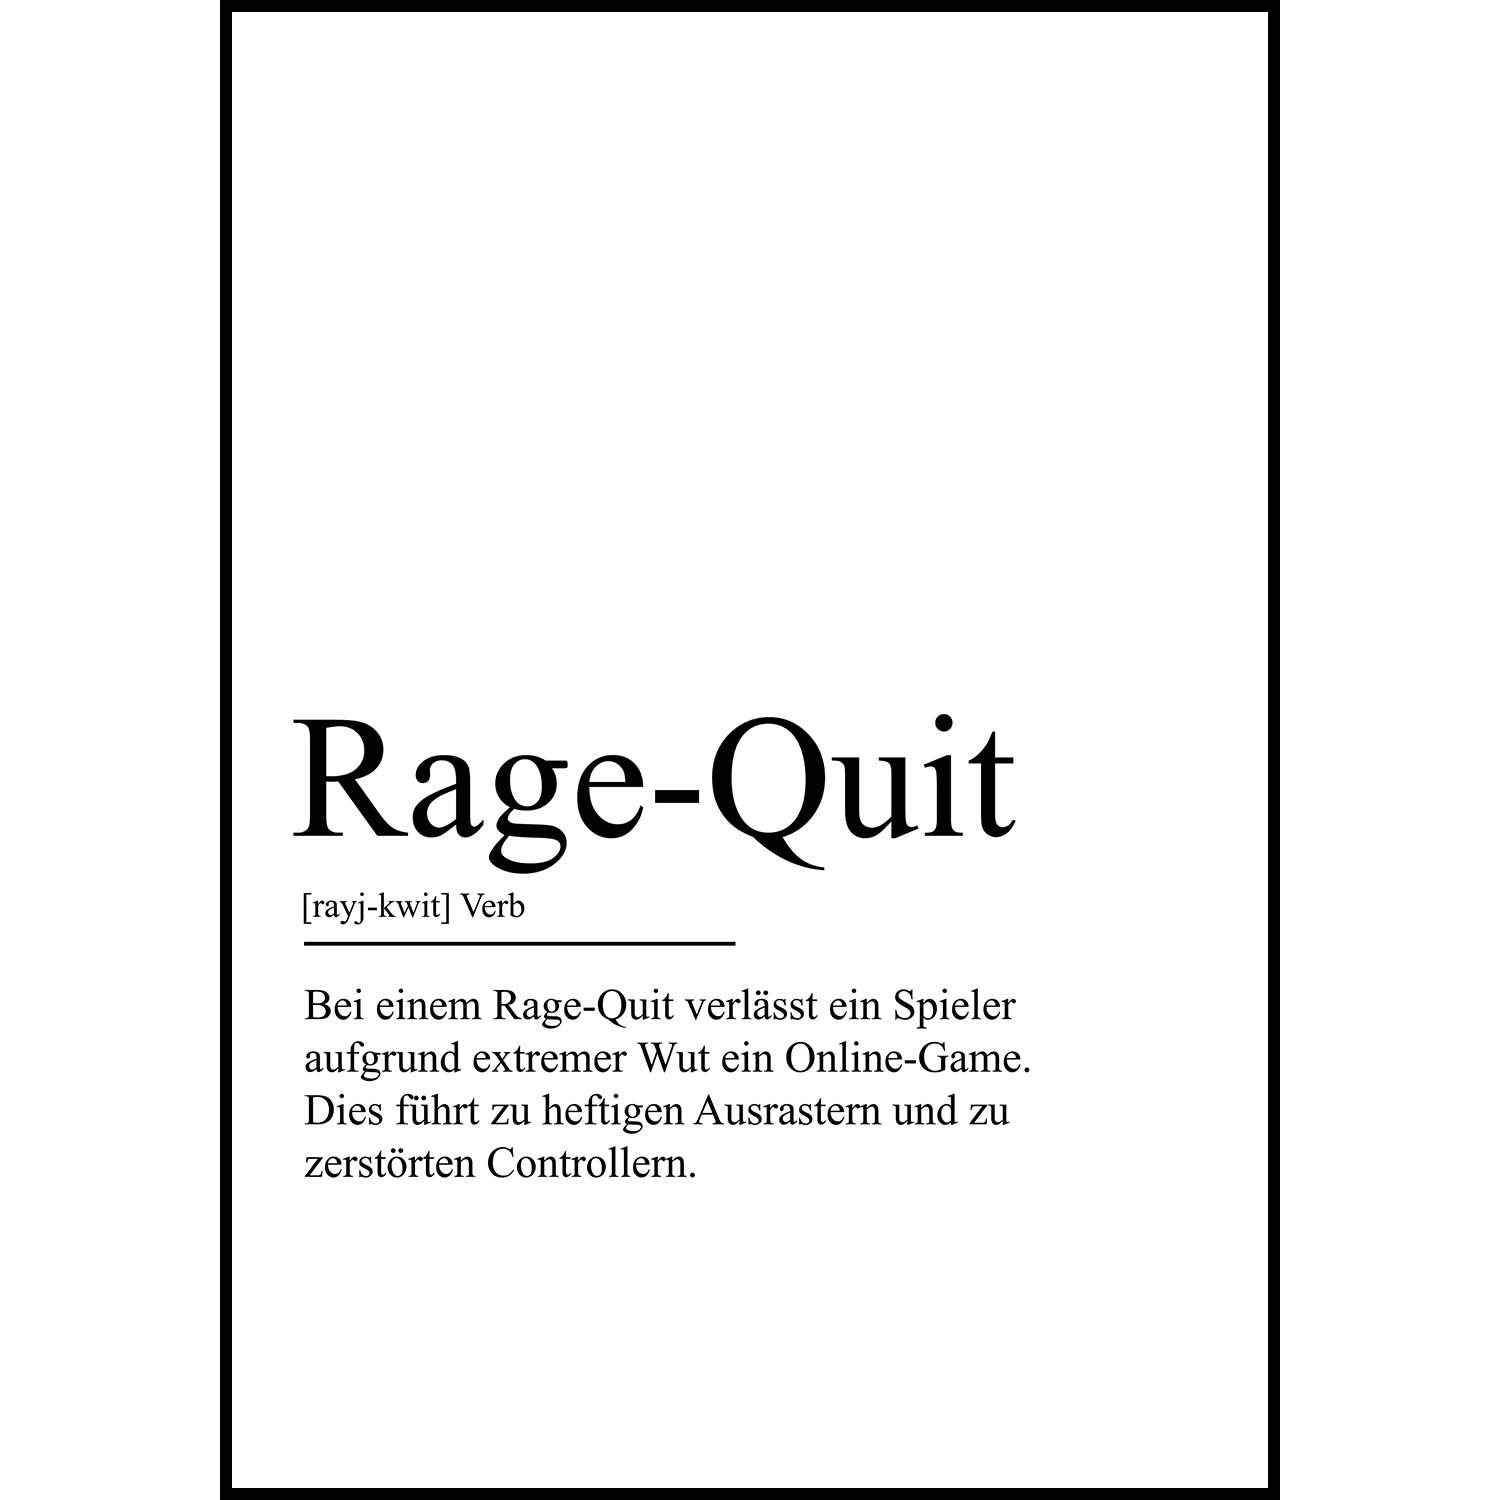 Rage-Quit Definition